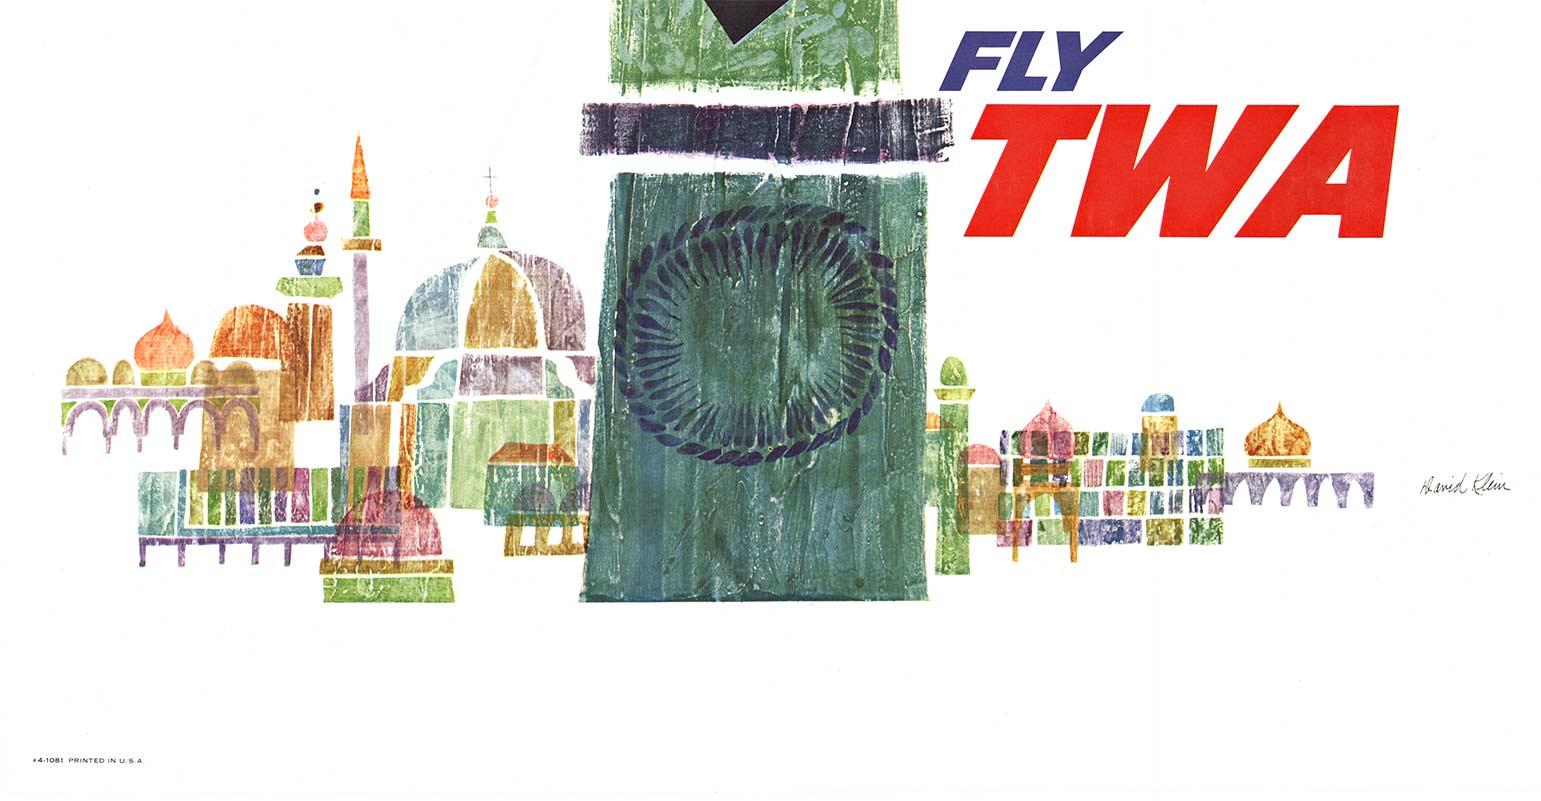 Vintage Original Israel Fly TWA  Trans World Airlines  travel poster - Gray Landscape Print by David Klein